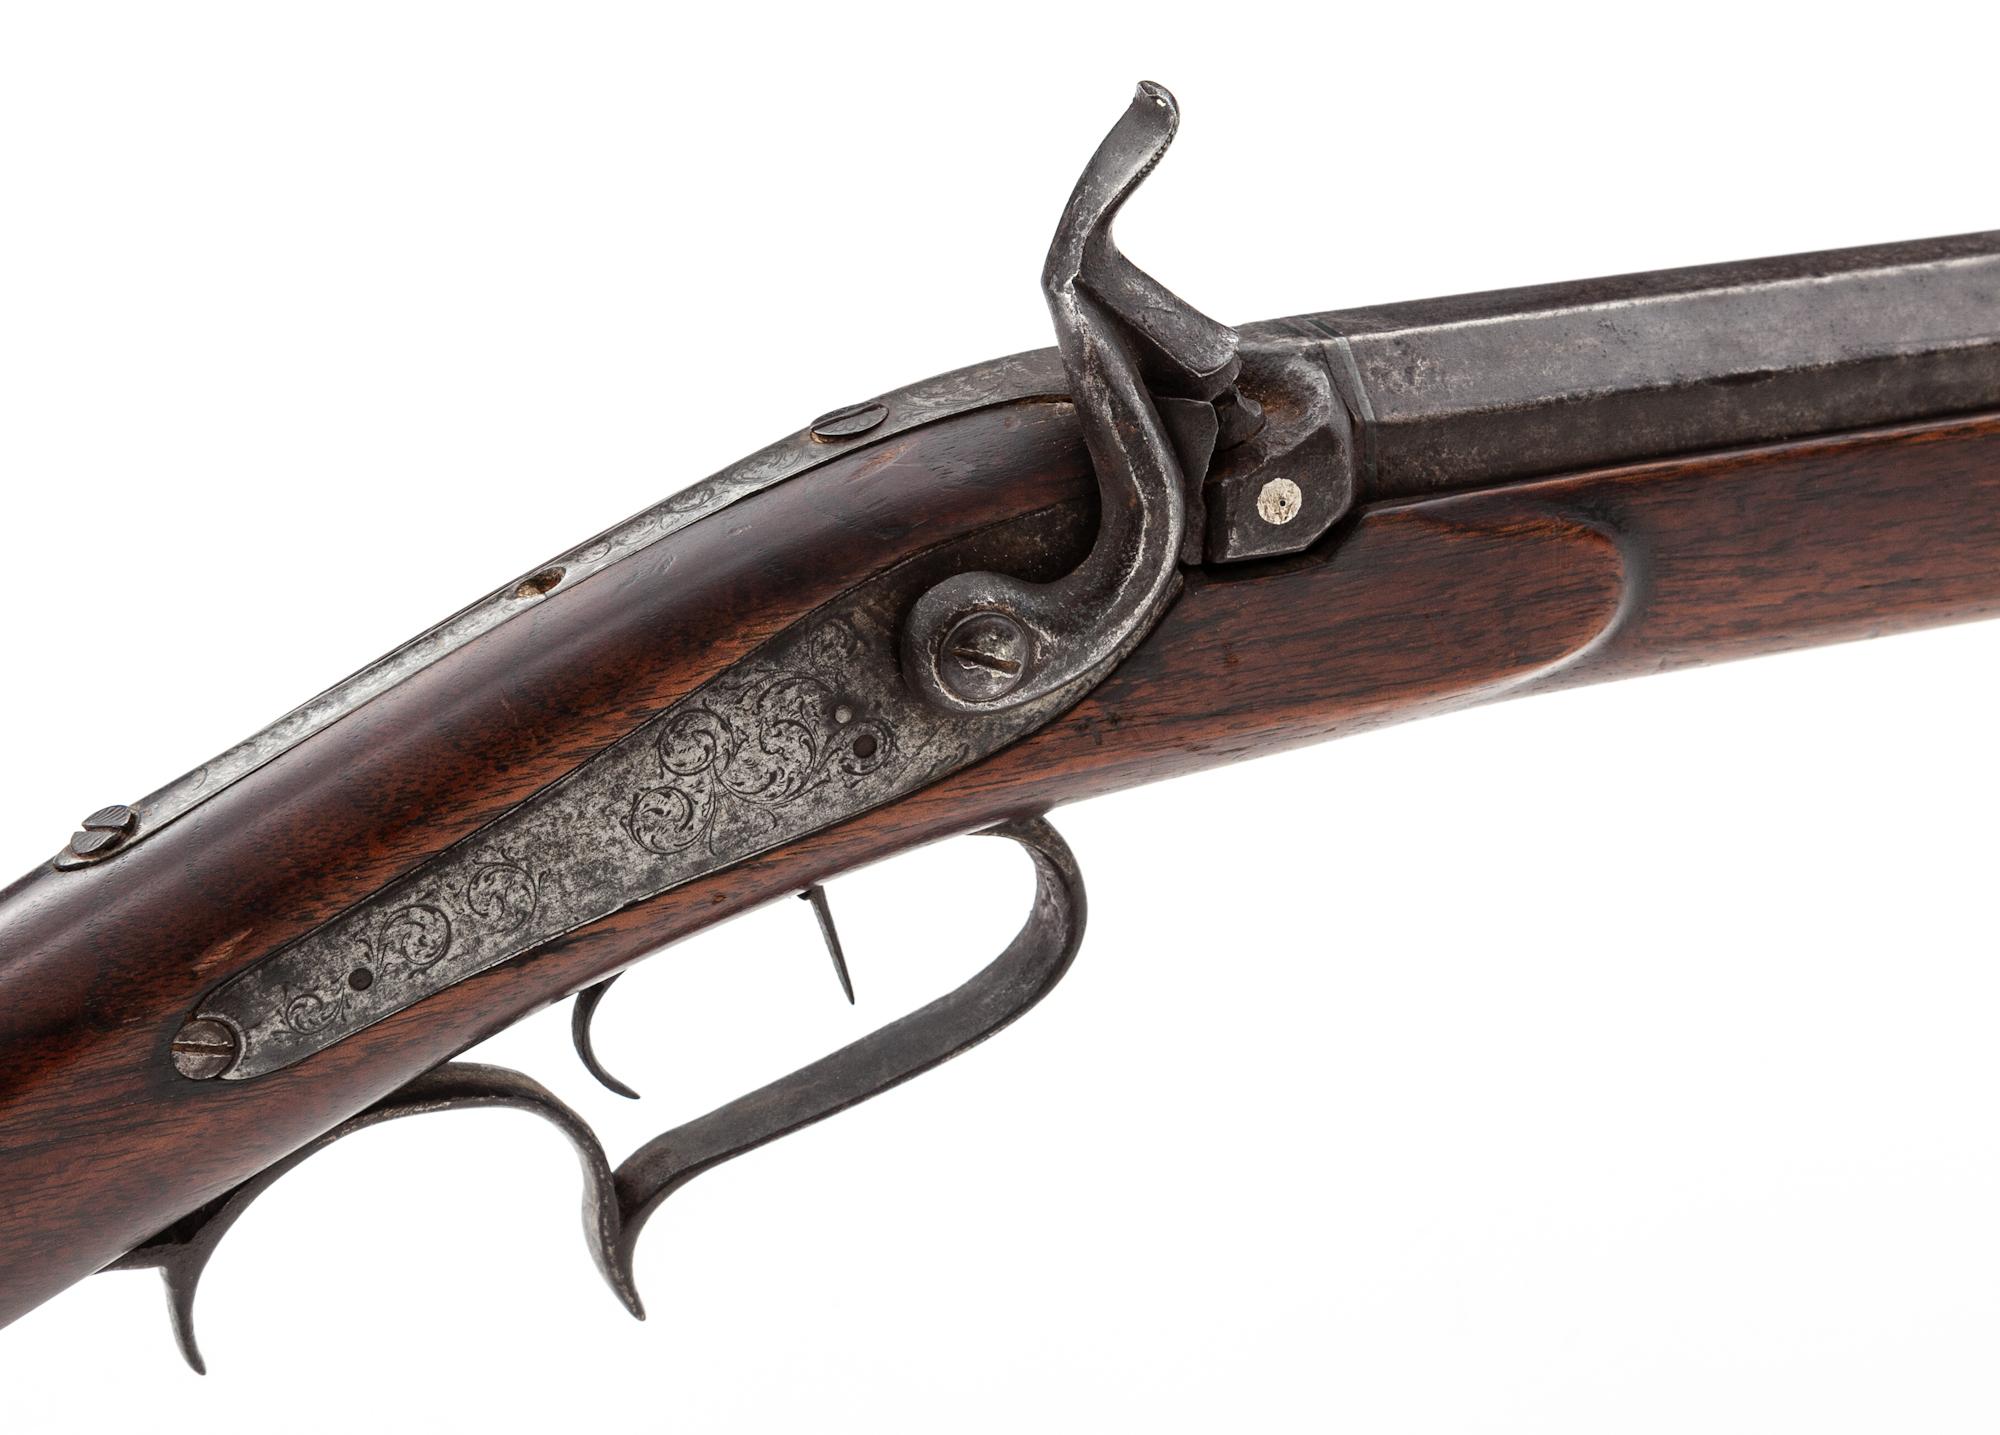 Antique Perc. Plains Rifle, by P. Reinhard